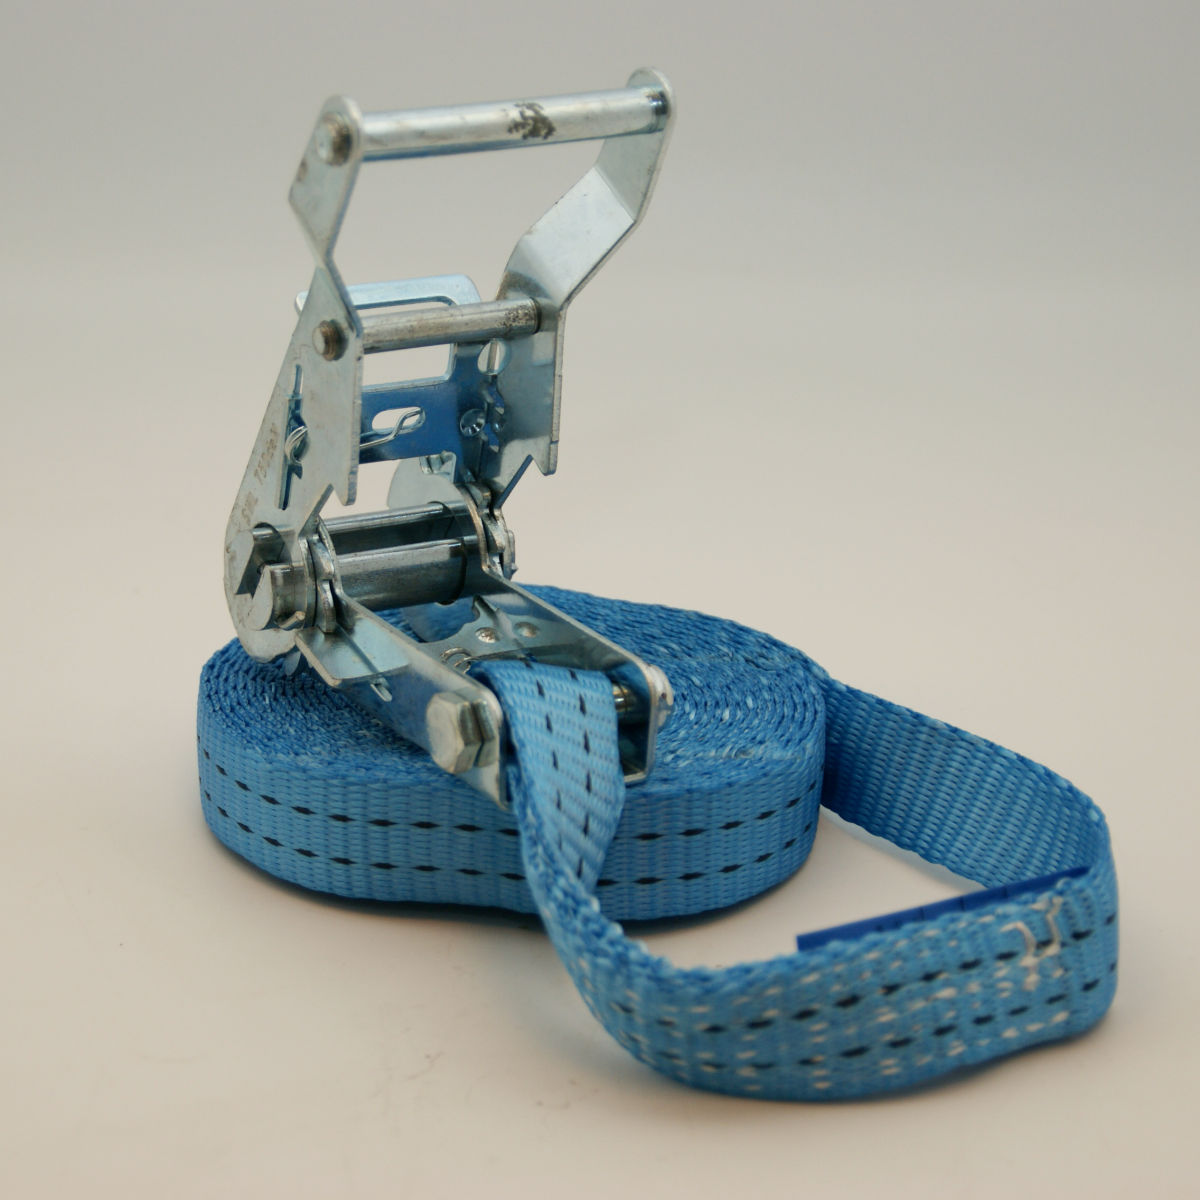 Sjorband: Spanband eindloos blauw, 25mm 1500 daN 7m